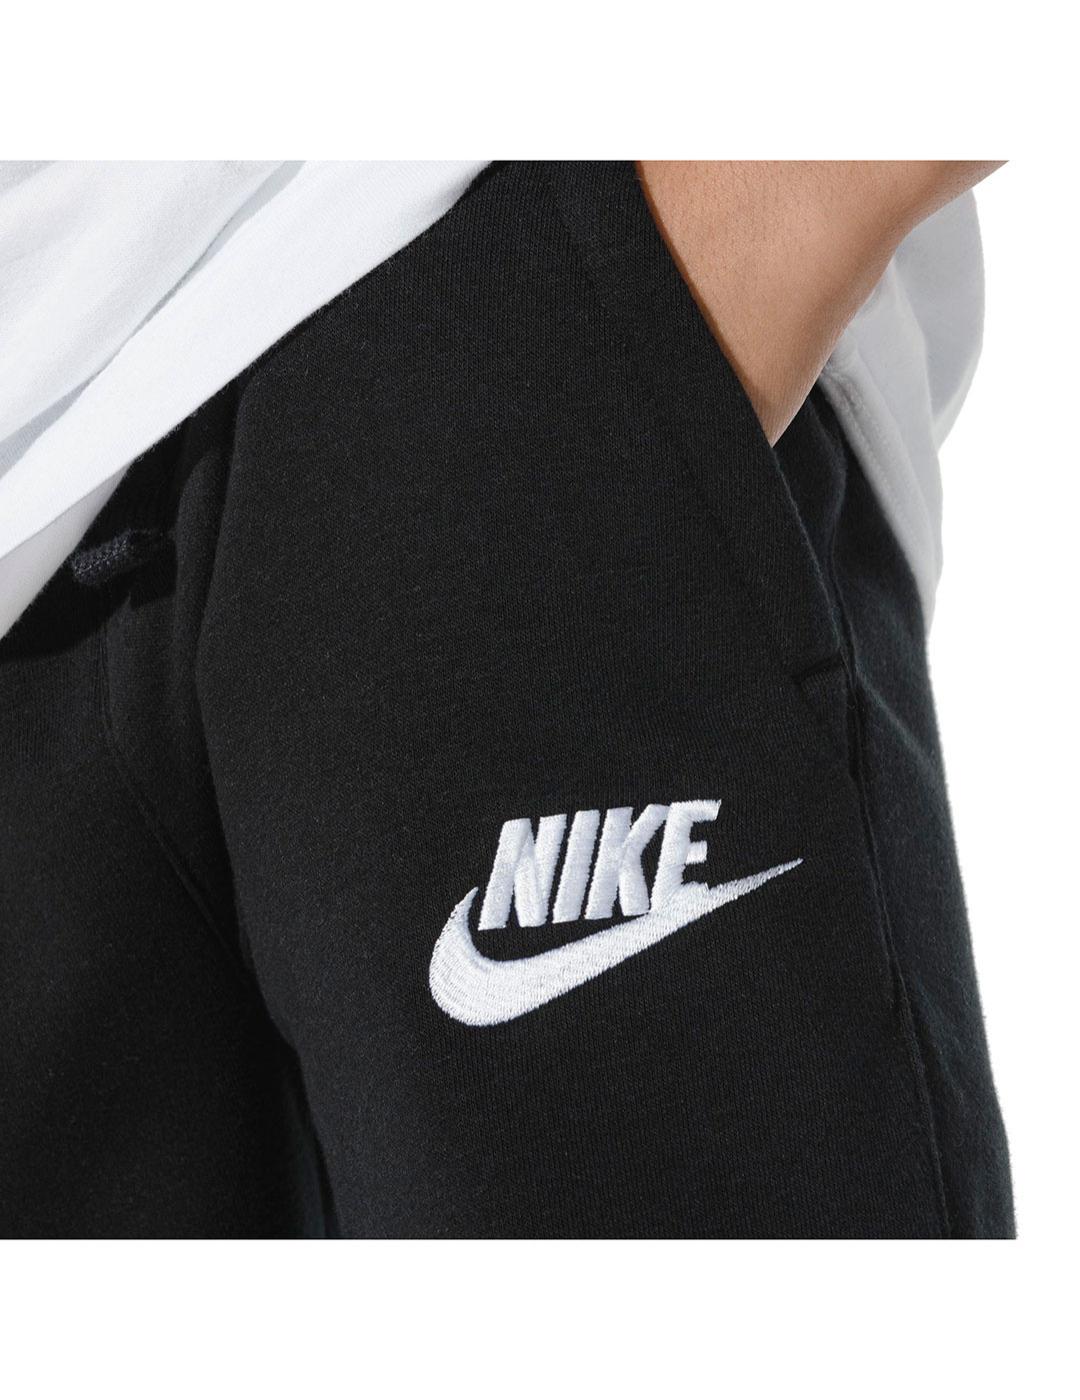 Pantalón Niñ@ Nike Jogger Pant Negro